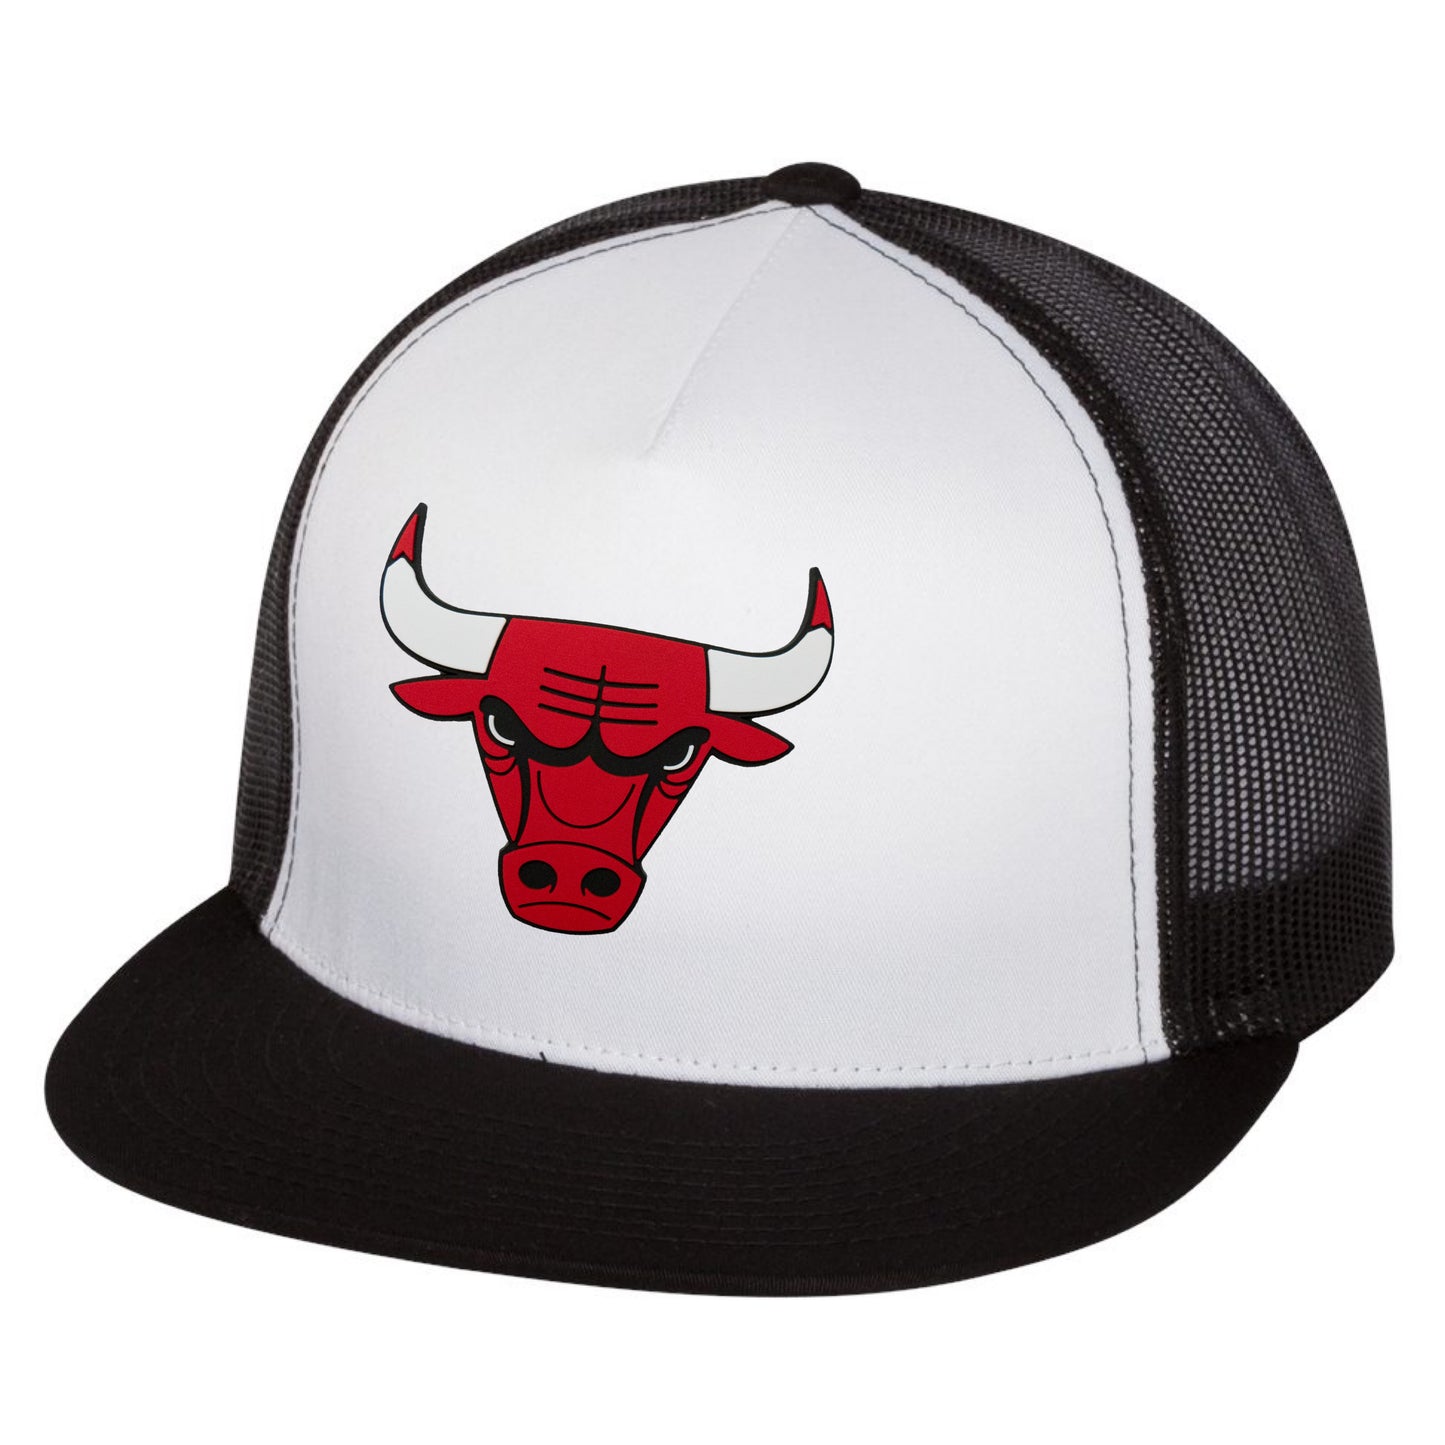 Chicago Bulls YP Snapback Flat Bill Trucker Hat- White/ Black - Ten Gallon Hat Co.